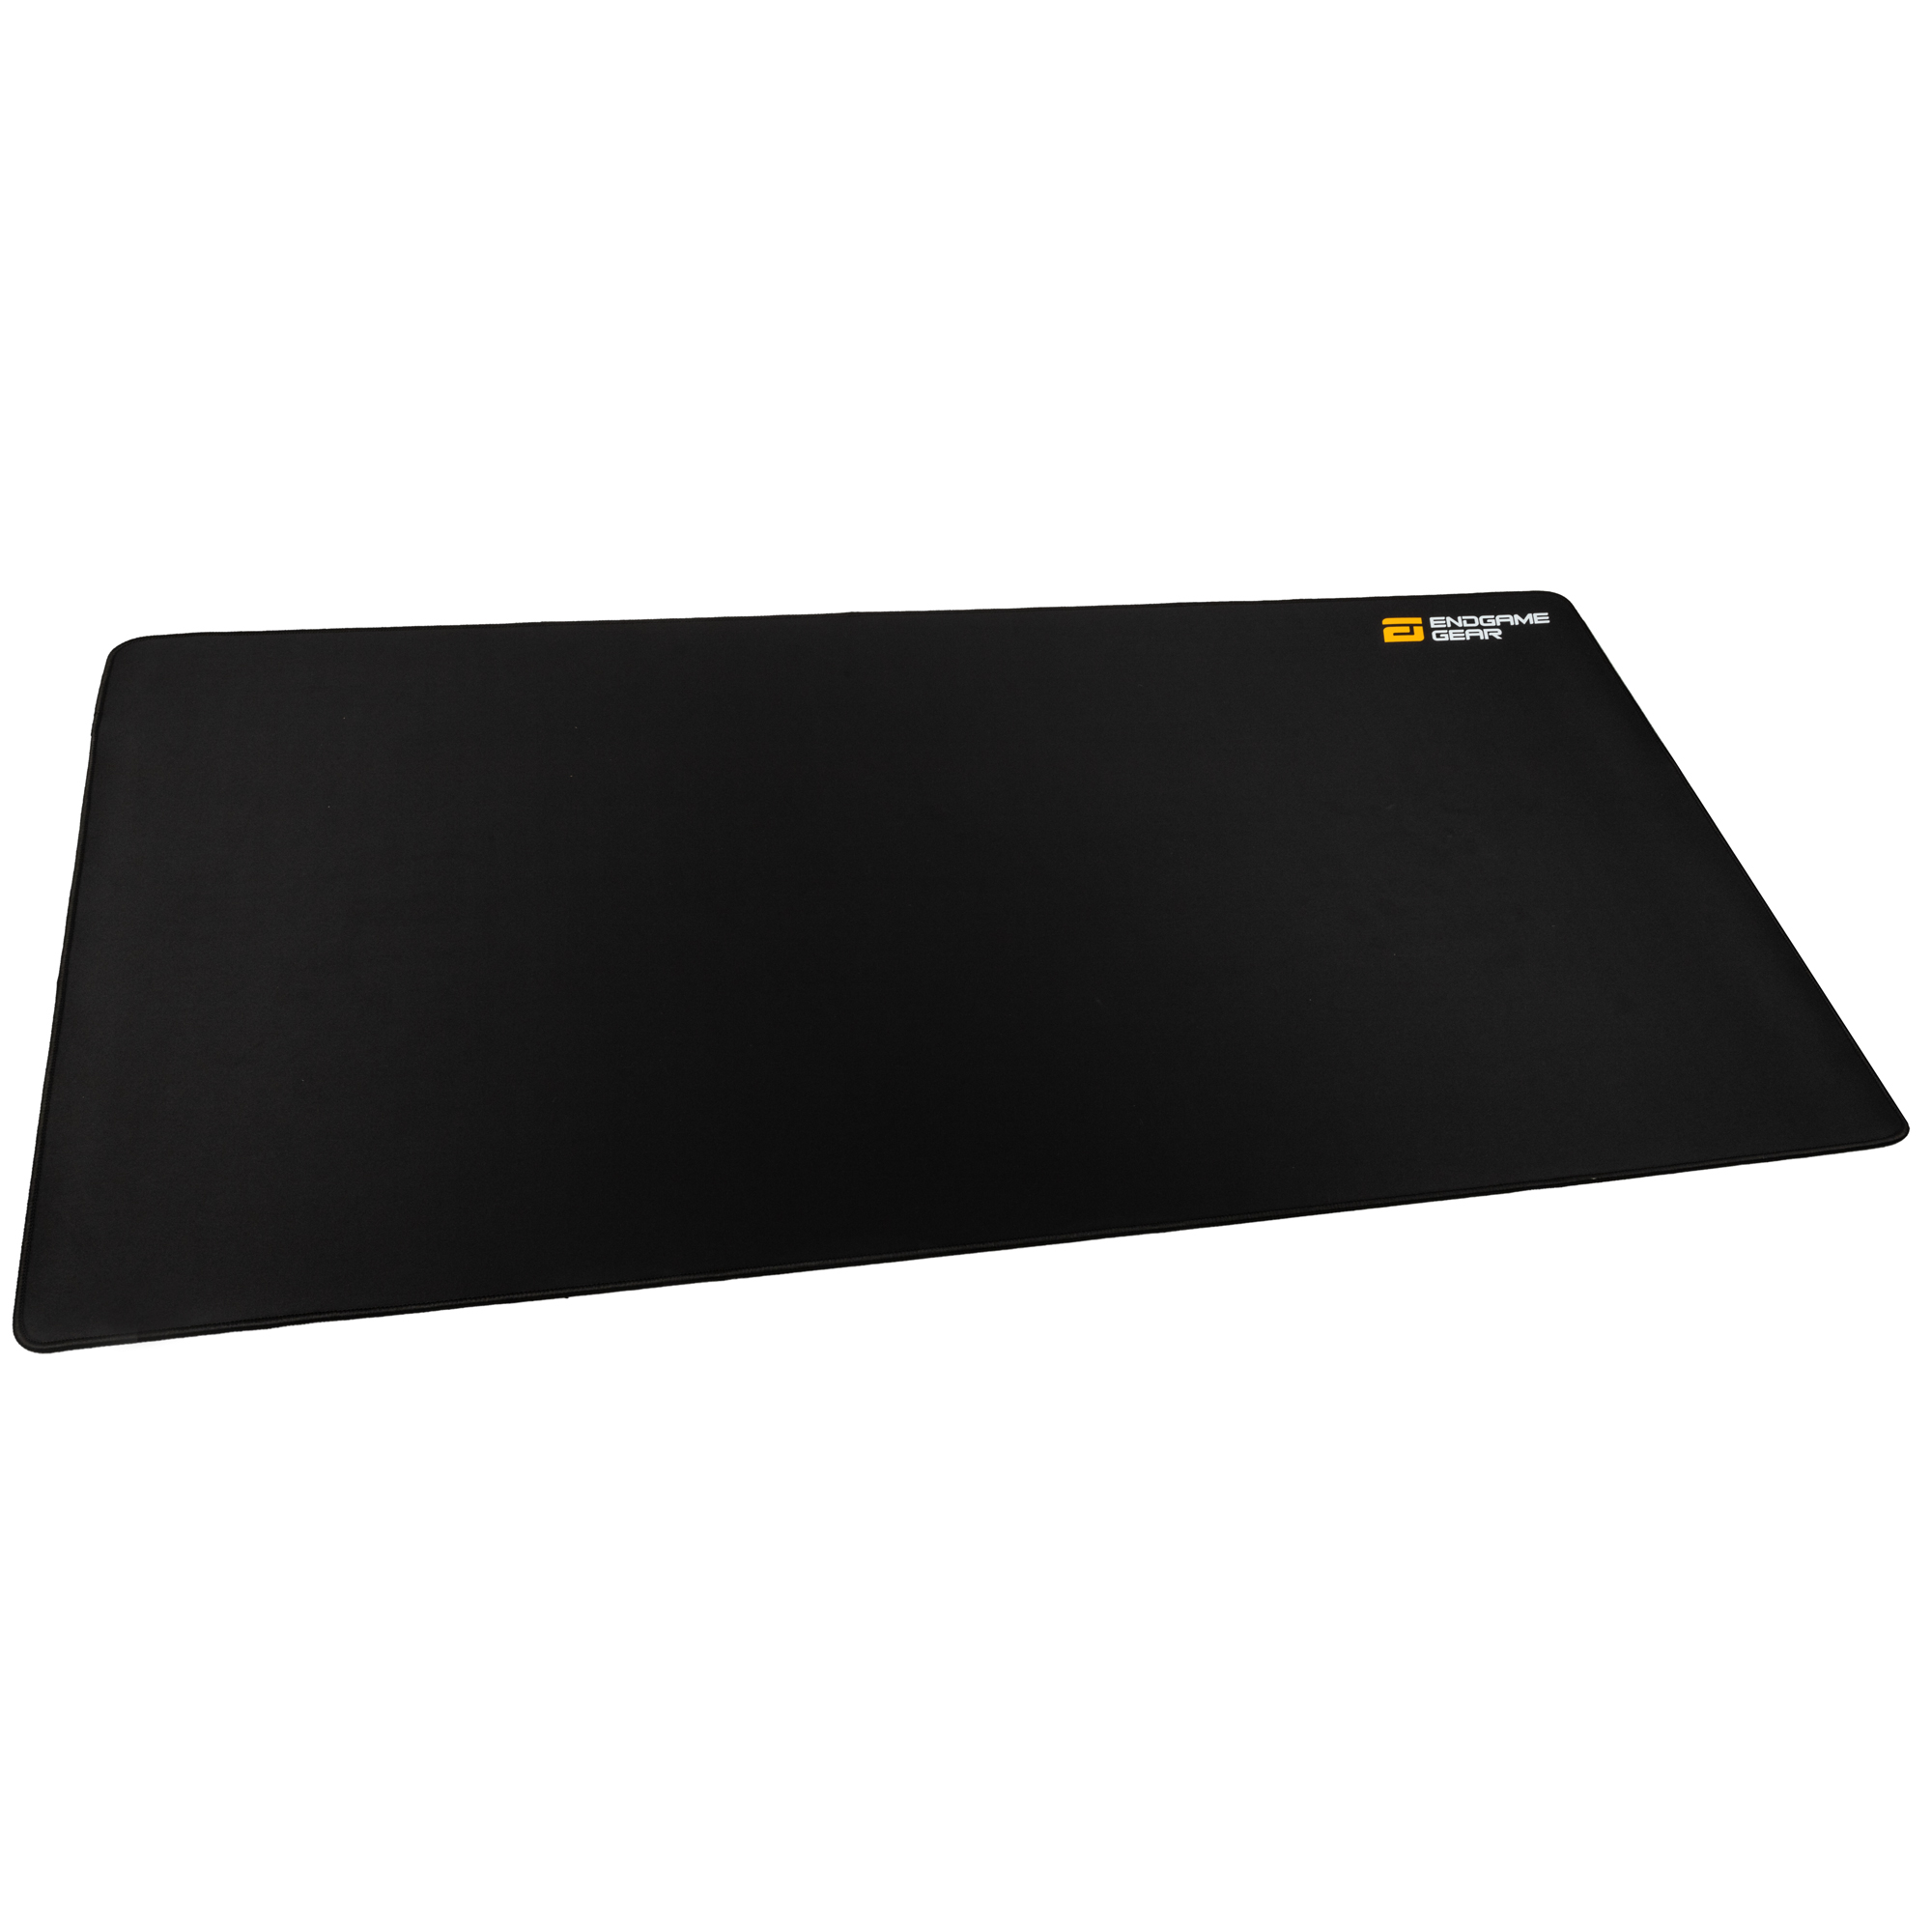 Endgame Gear MPJ-1200 3XL Gaming Surface Black 1200x600x3mm